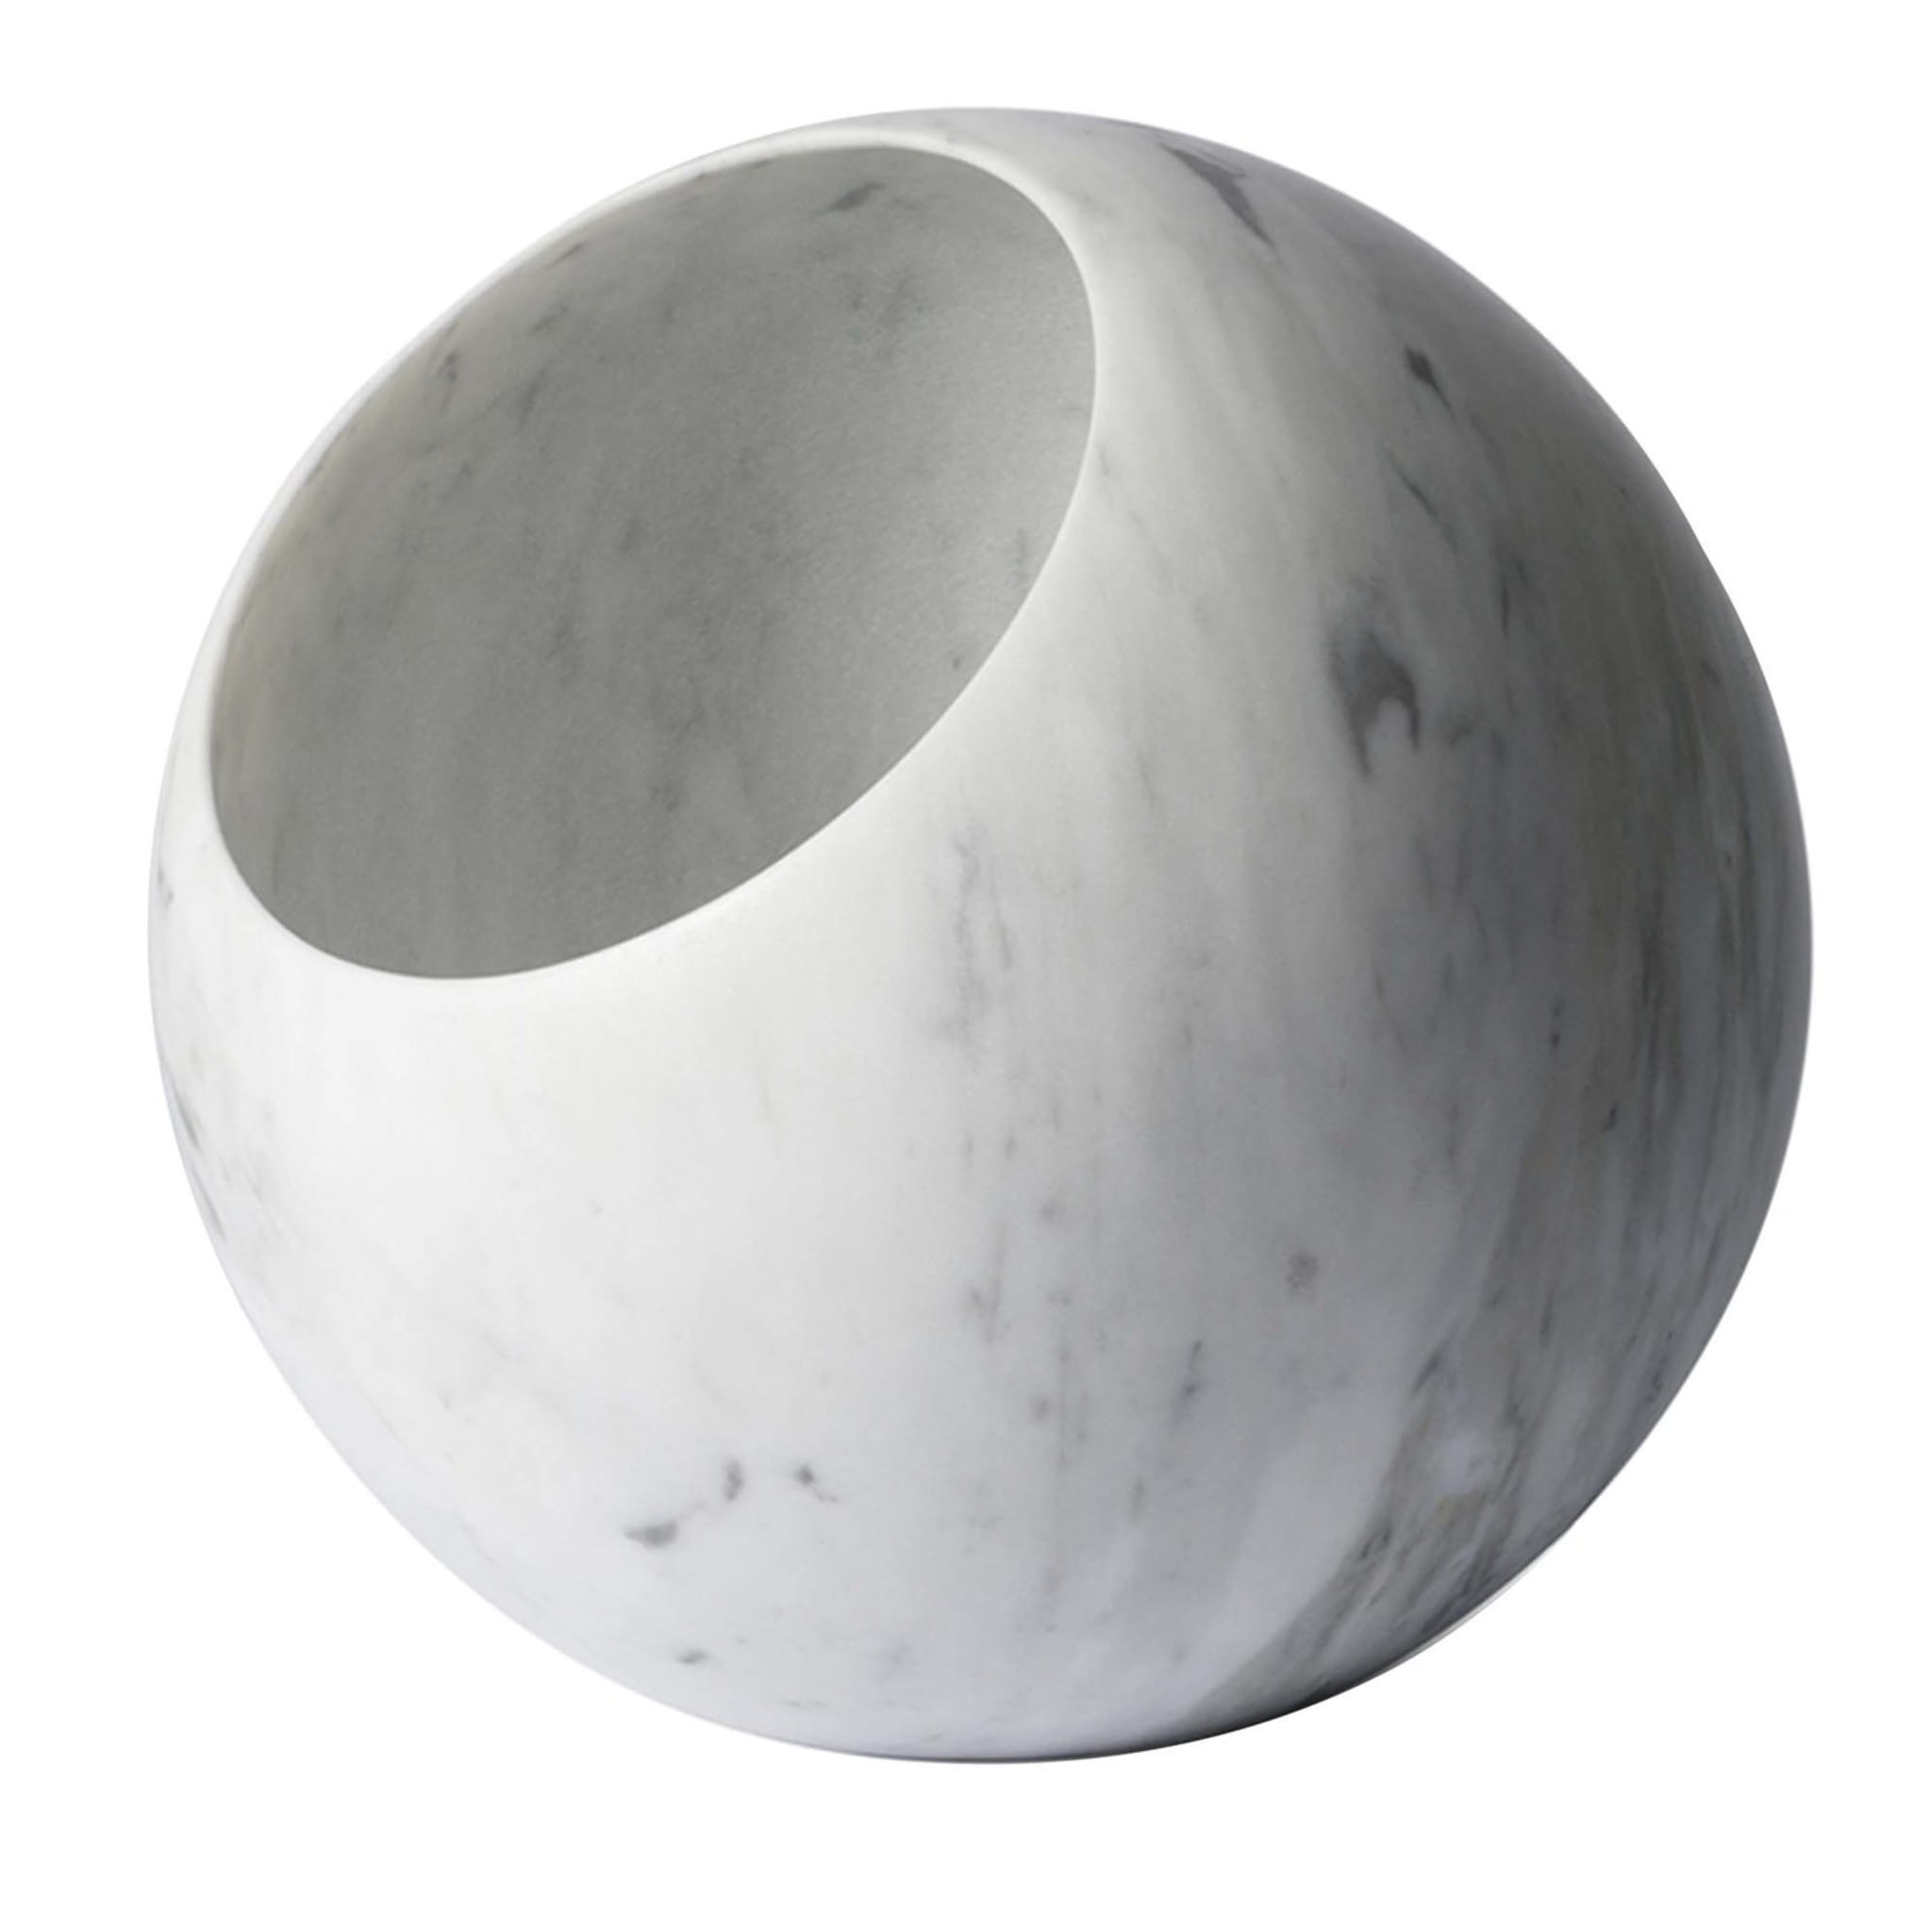 Urano Table Lamp by Elisa Ossino #1 - Main view